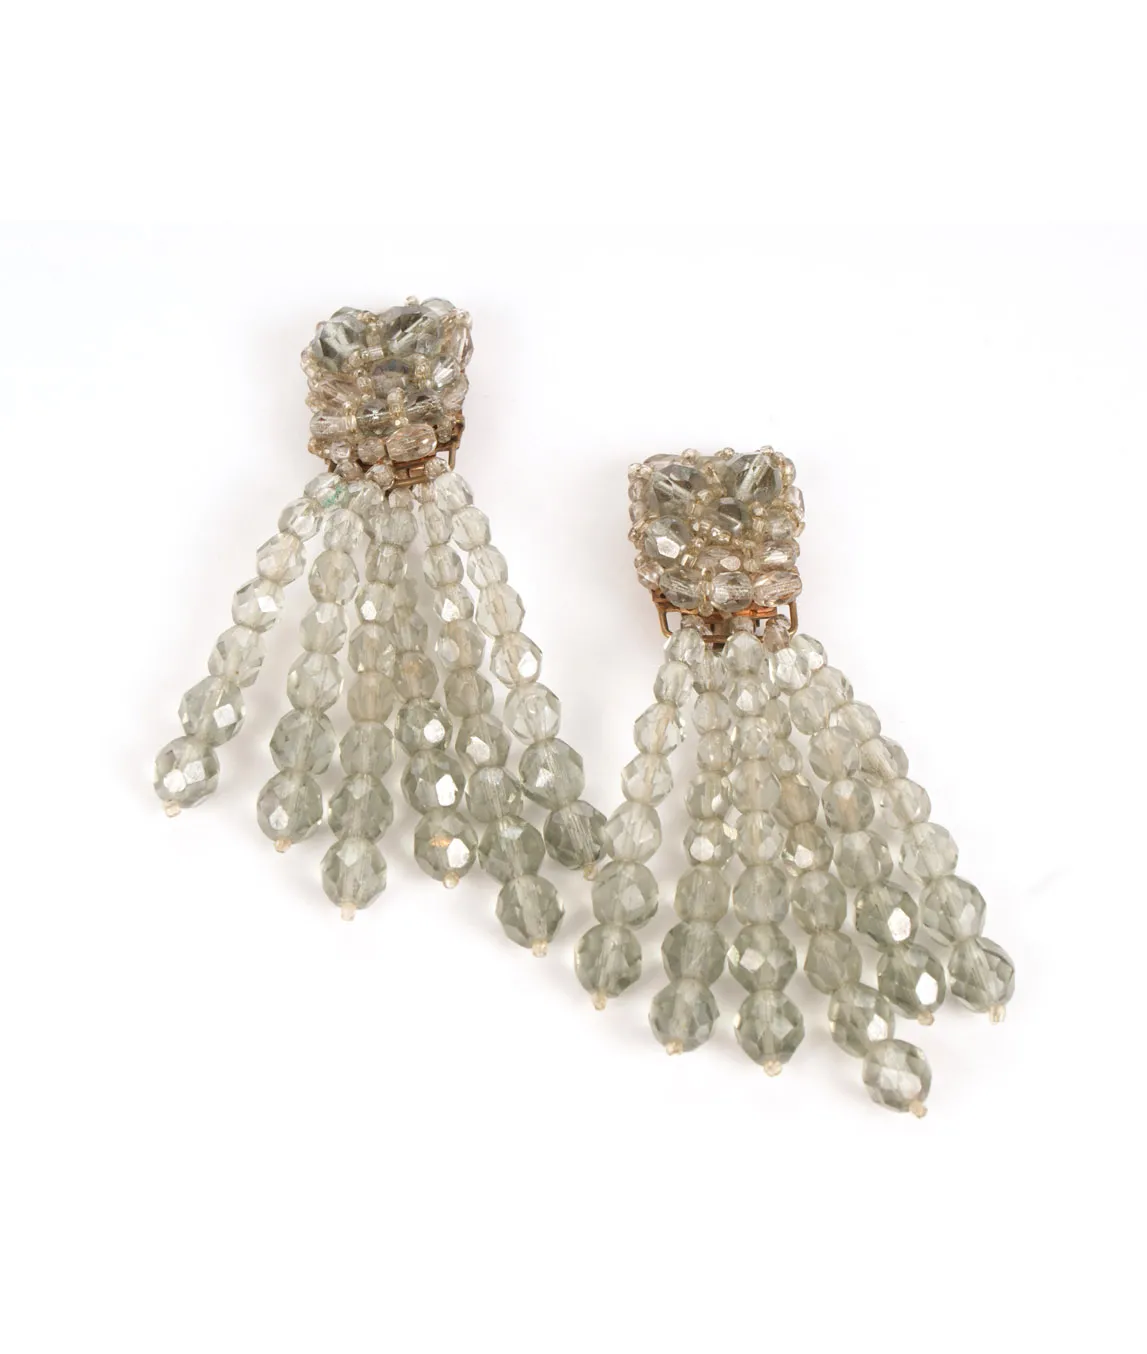 Vintage earrings by Coppola e Toppo